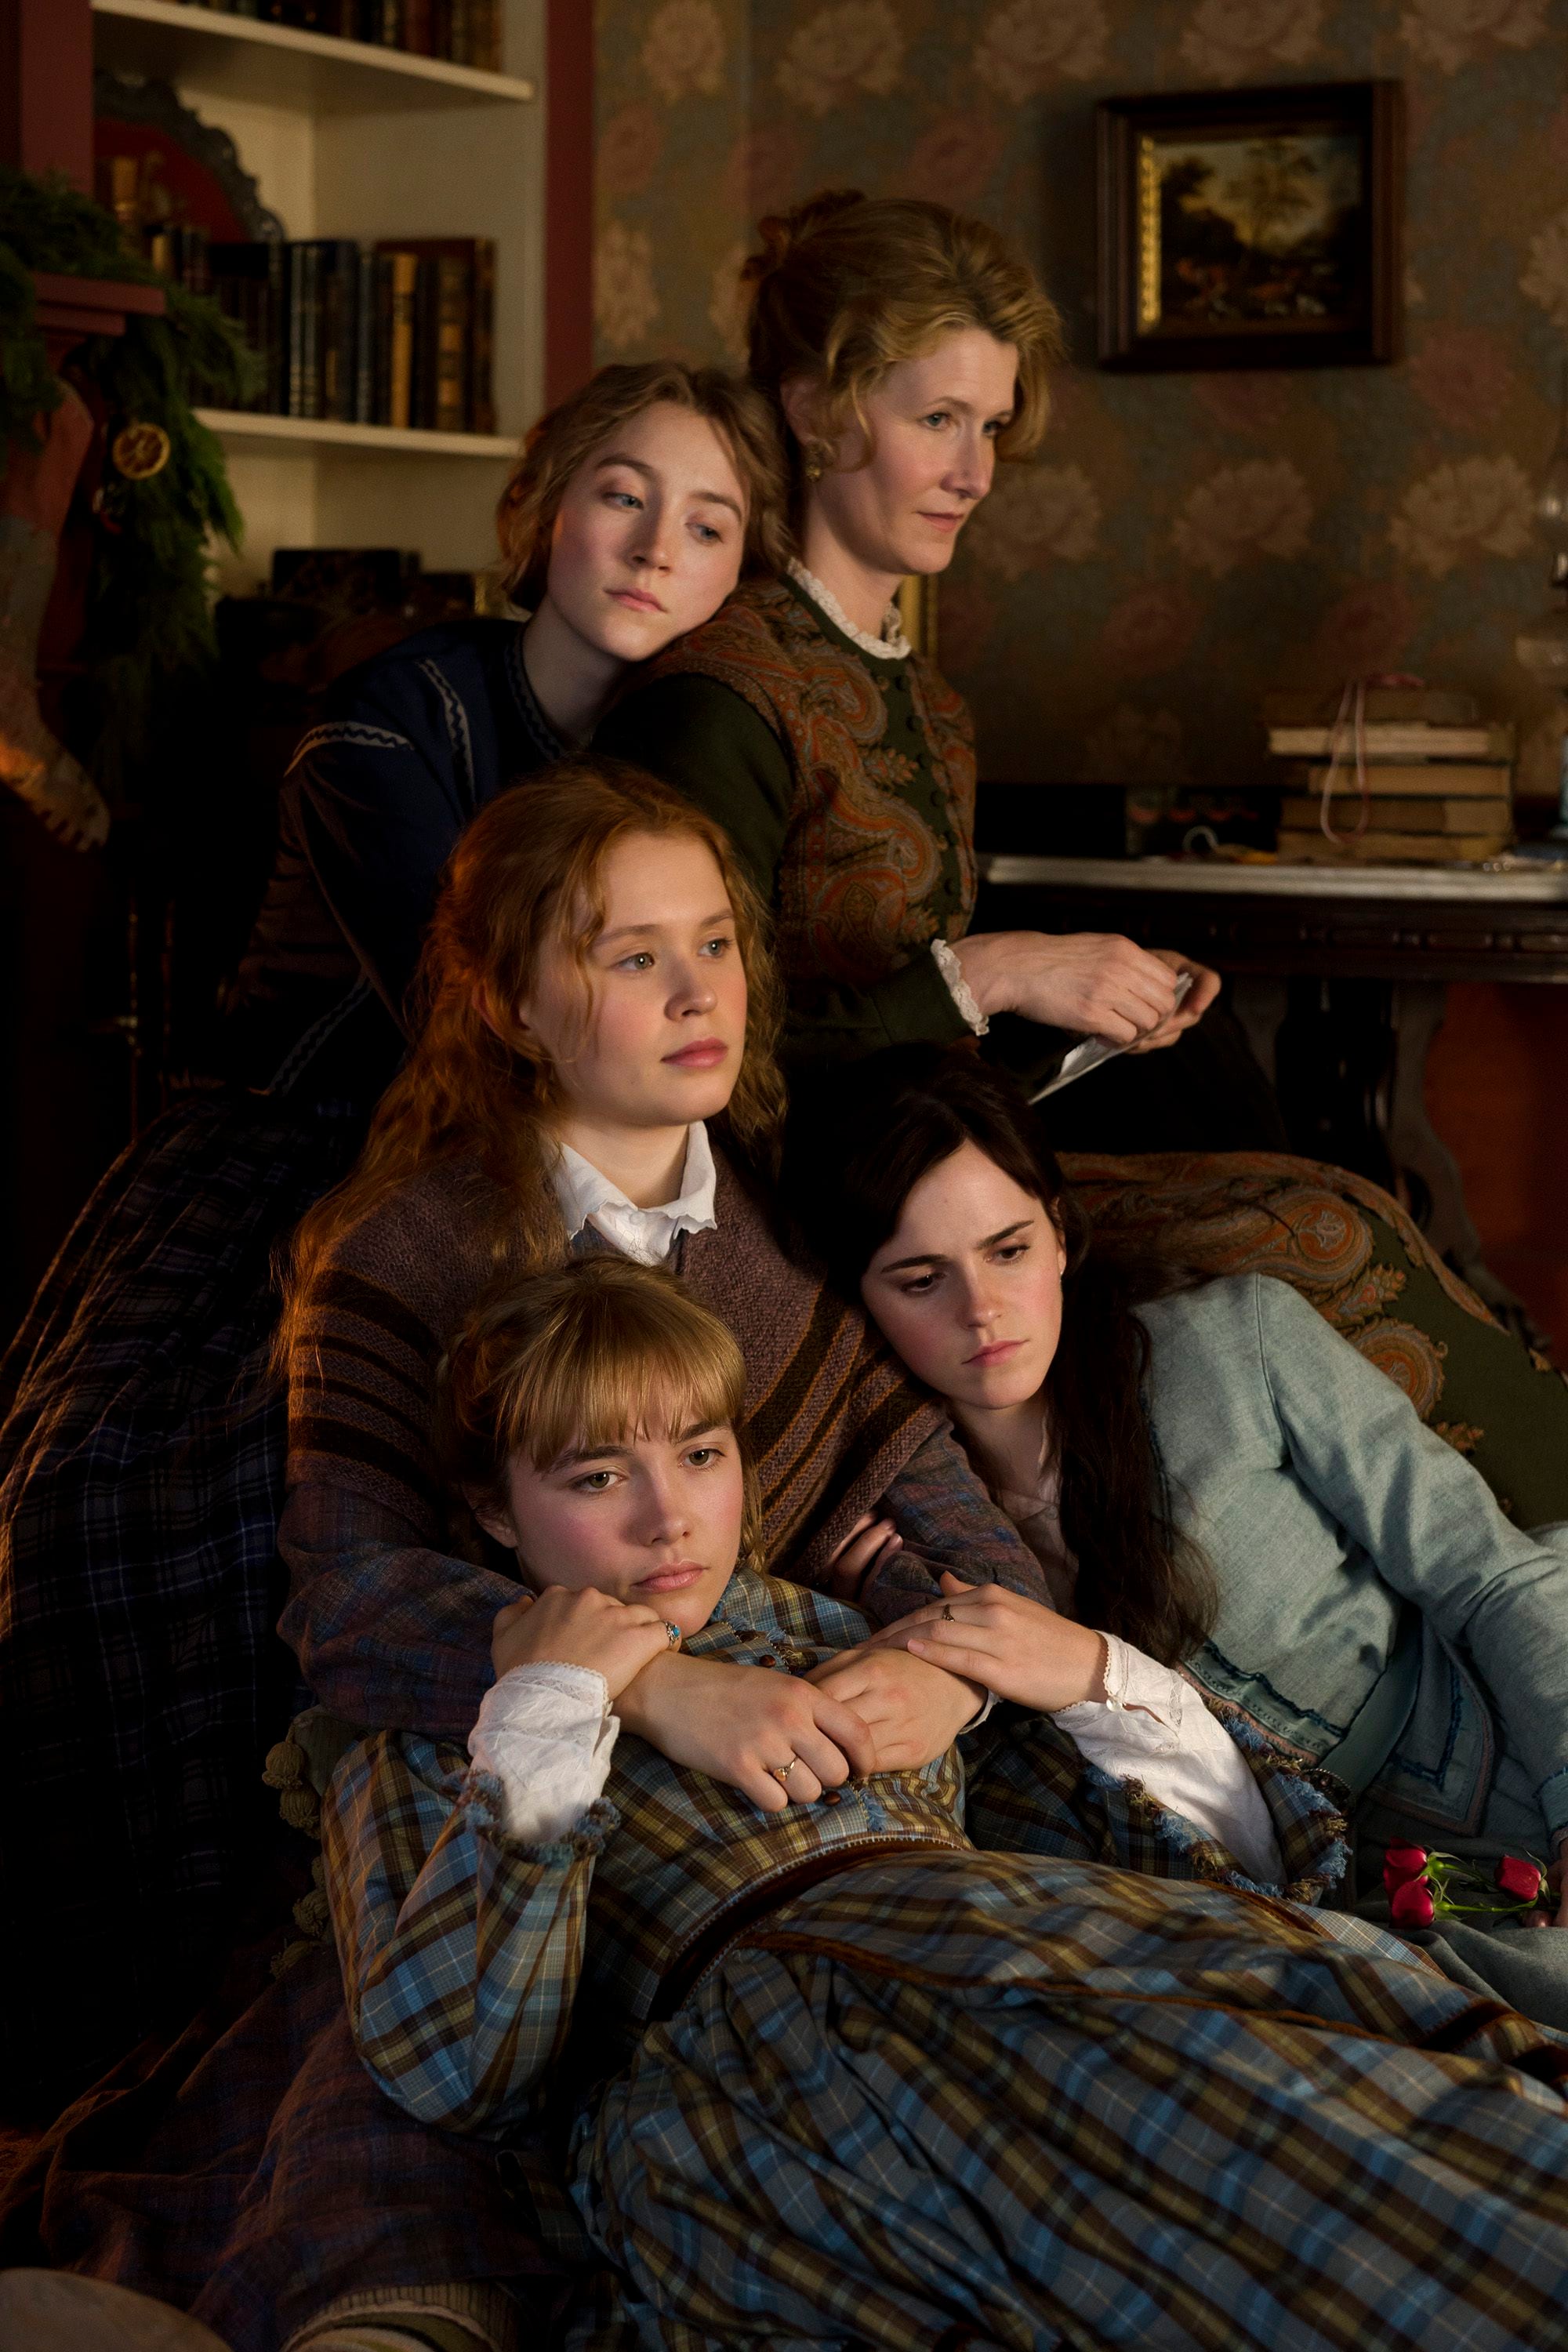 Saoirse Ronan, Laura Dern, Emma Watson, Florence Pugh y Eliza Scanlen en "Little Women" (“Mujercitas”) de Greta Gerwig. (Wilson Webb/Sony Pictures via AP)